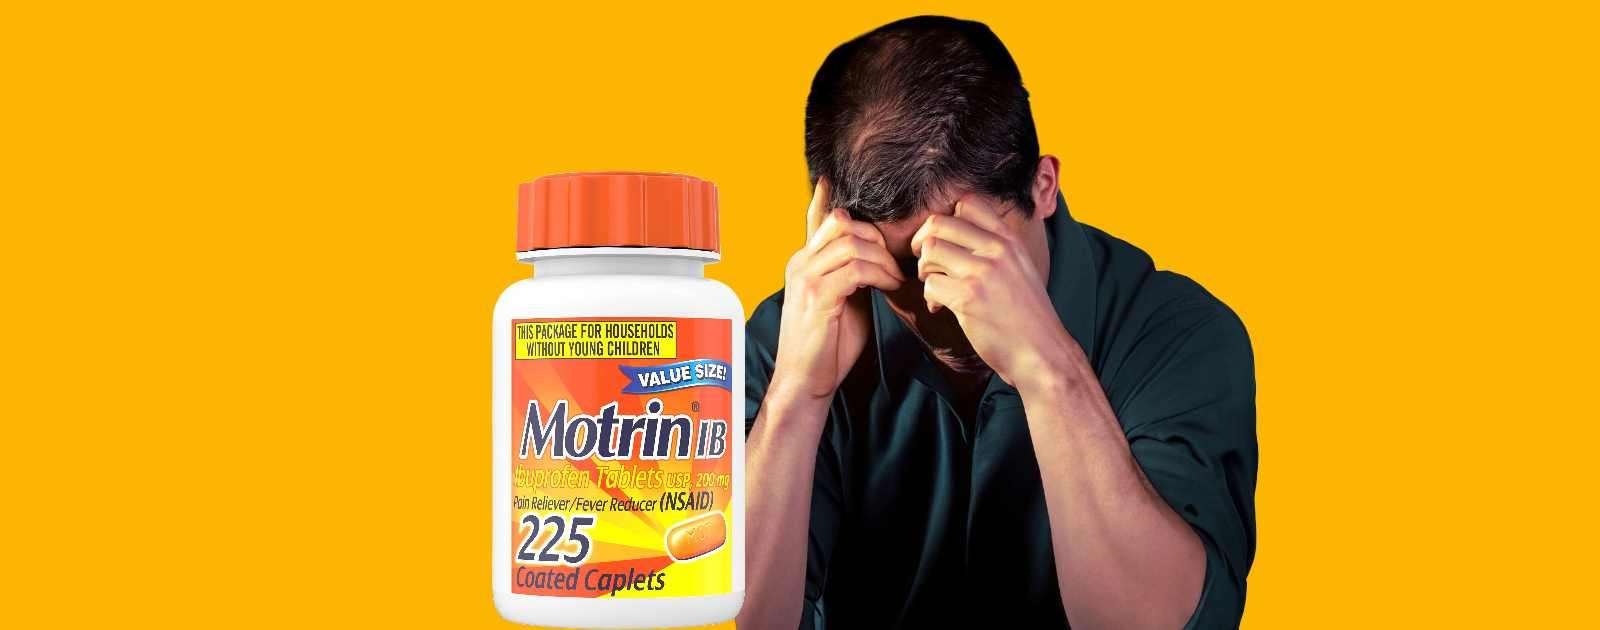 does motrin help with headaches